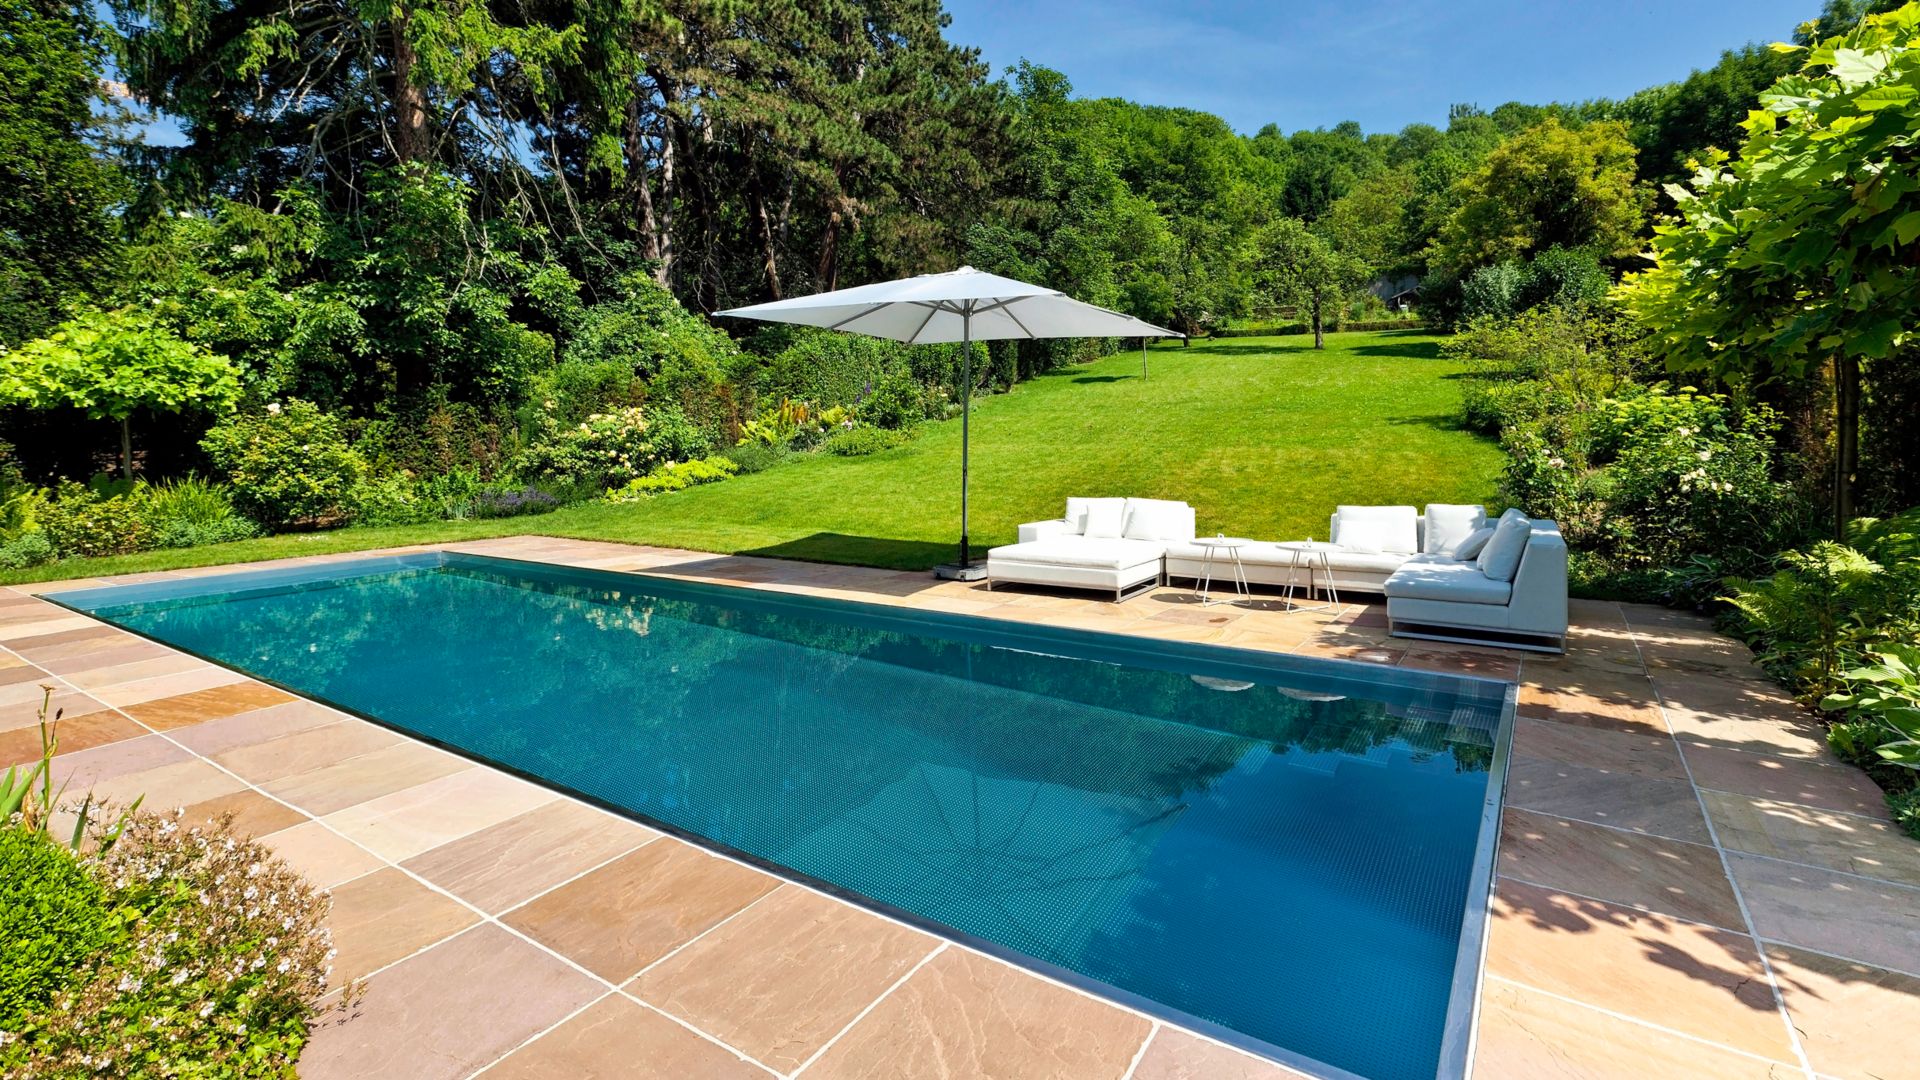 Modern swimming pool in a backyard garden on a sunny day